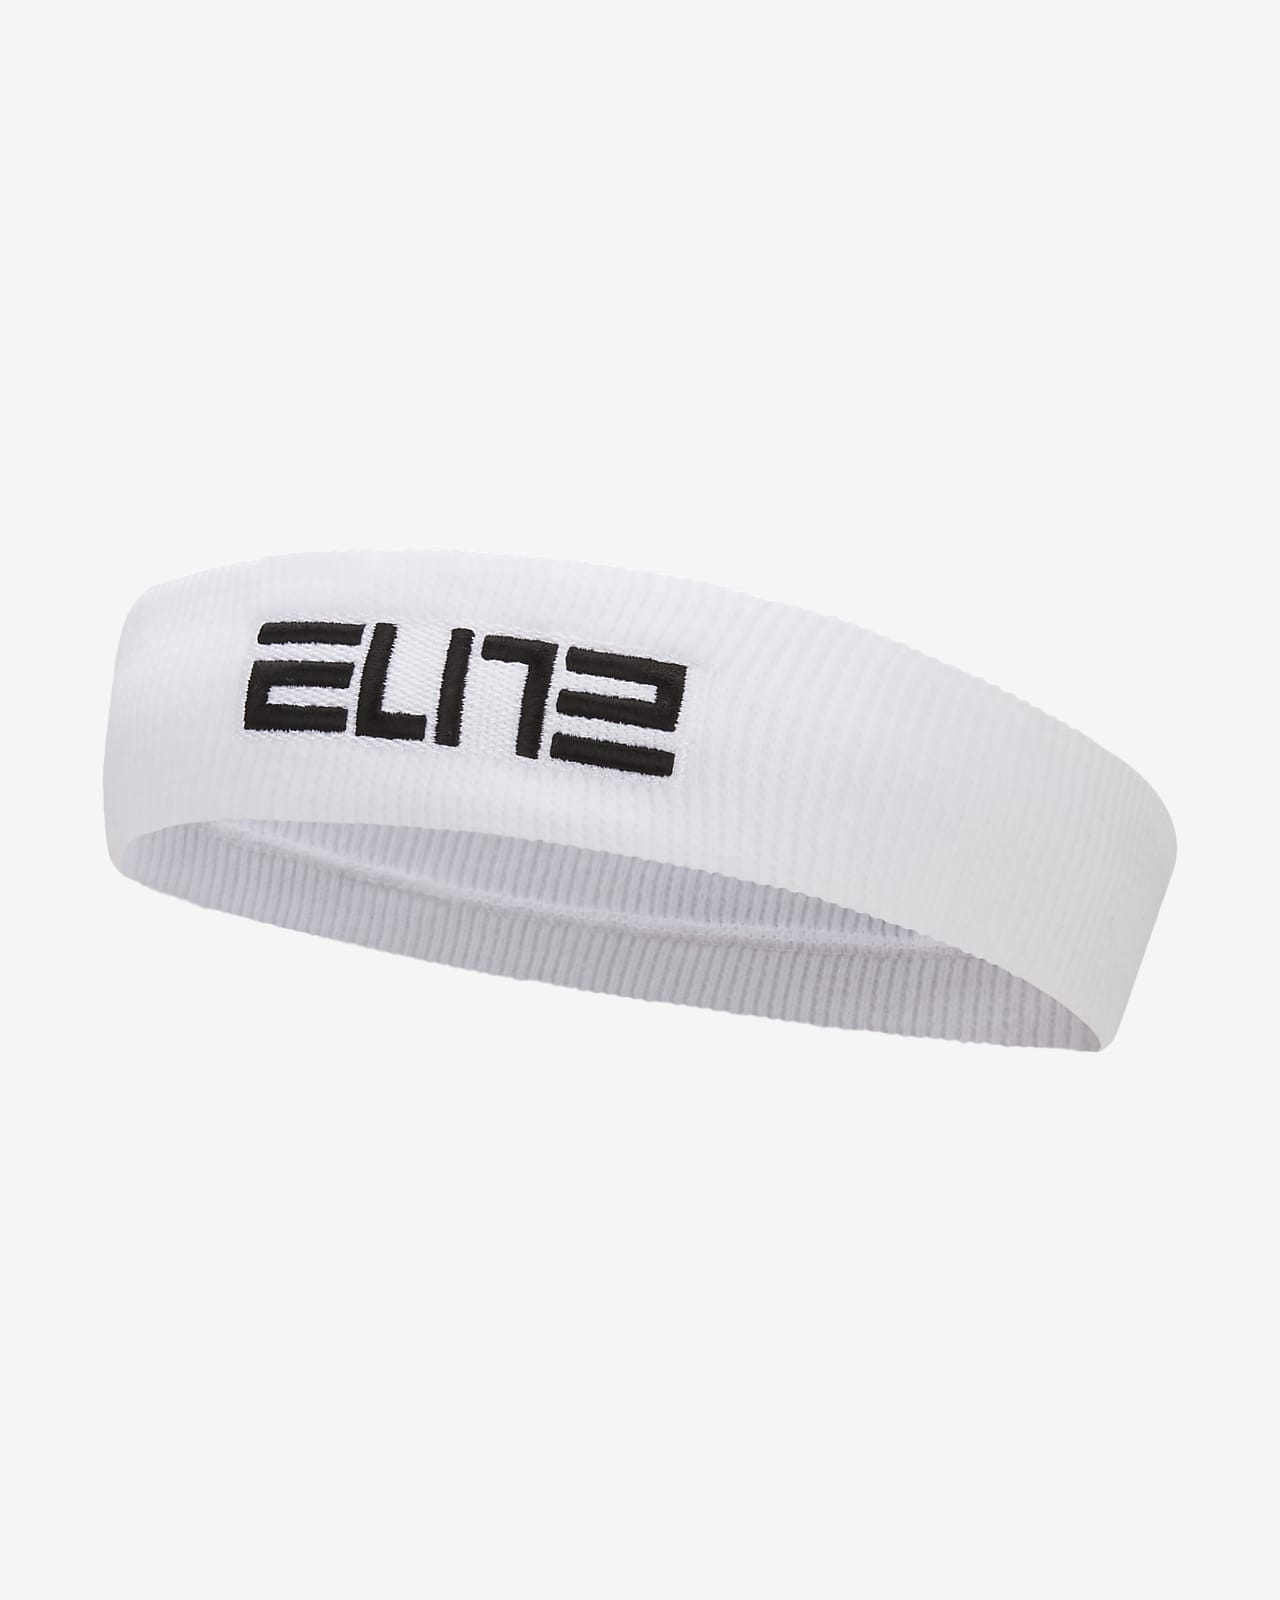 Bandeau Nike Elite. Nike FR